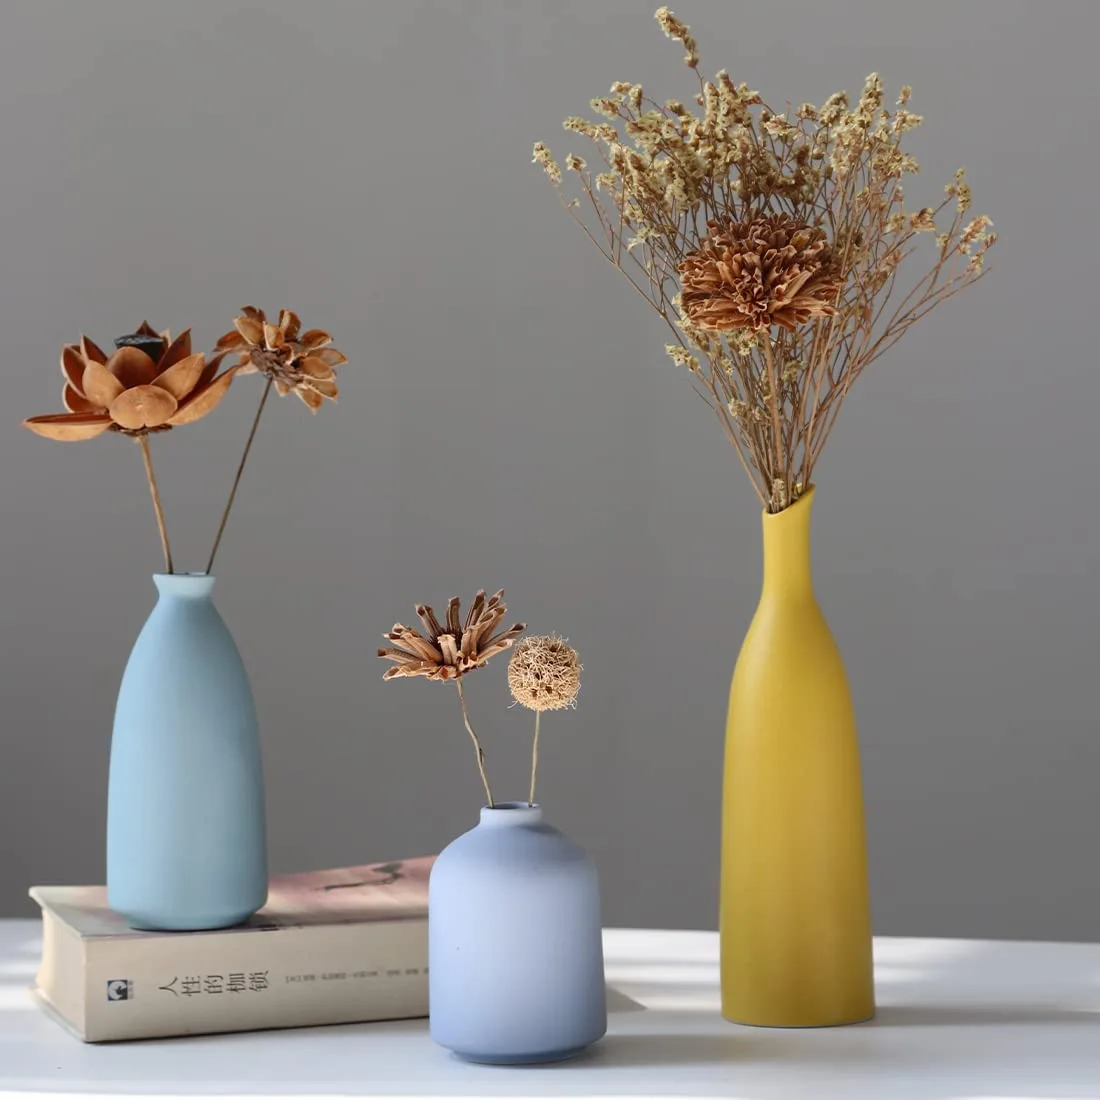 Glass vases: